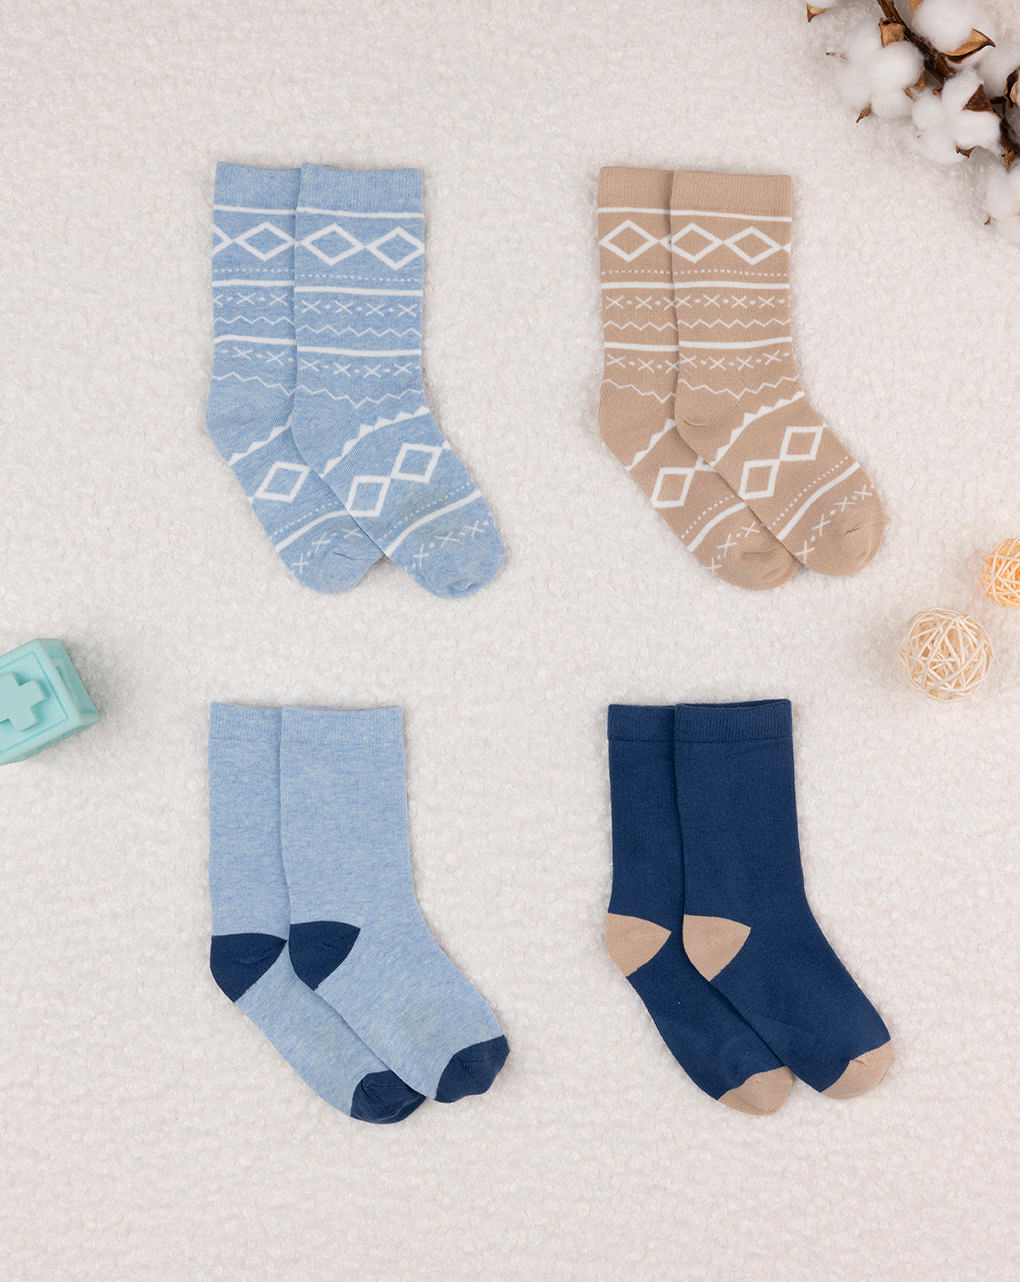 Lote 4 calcetines bebé azul/beige - Prénatal